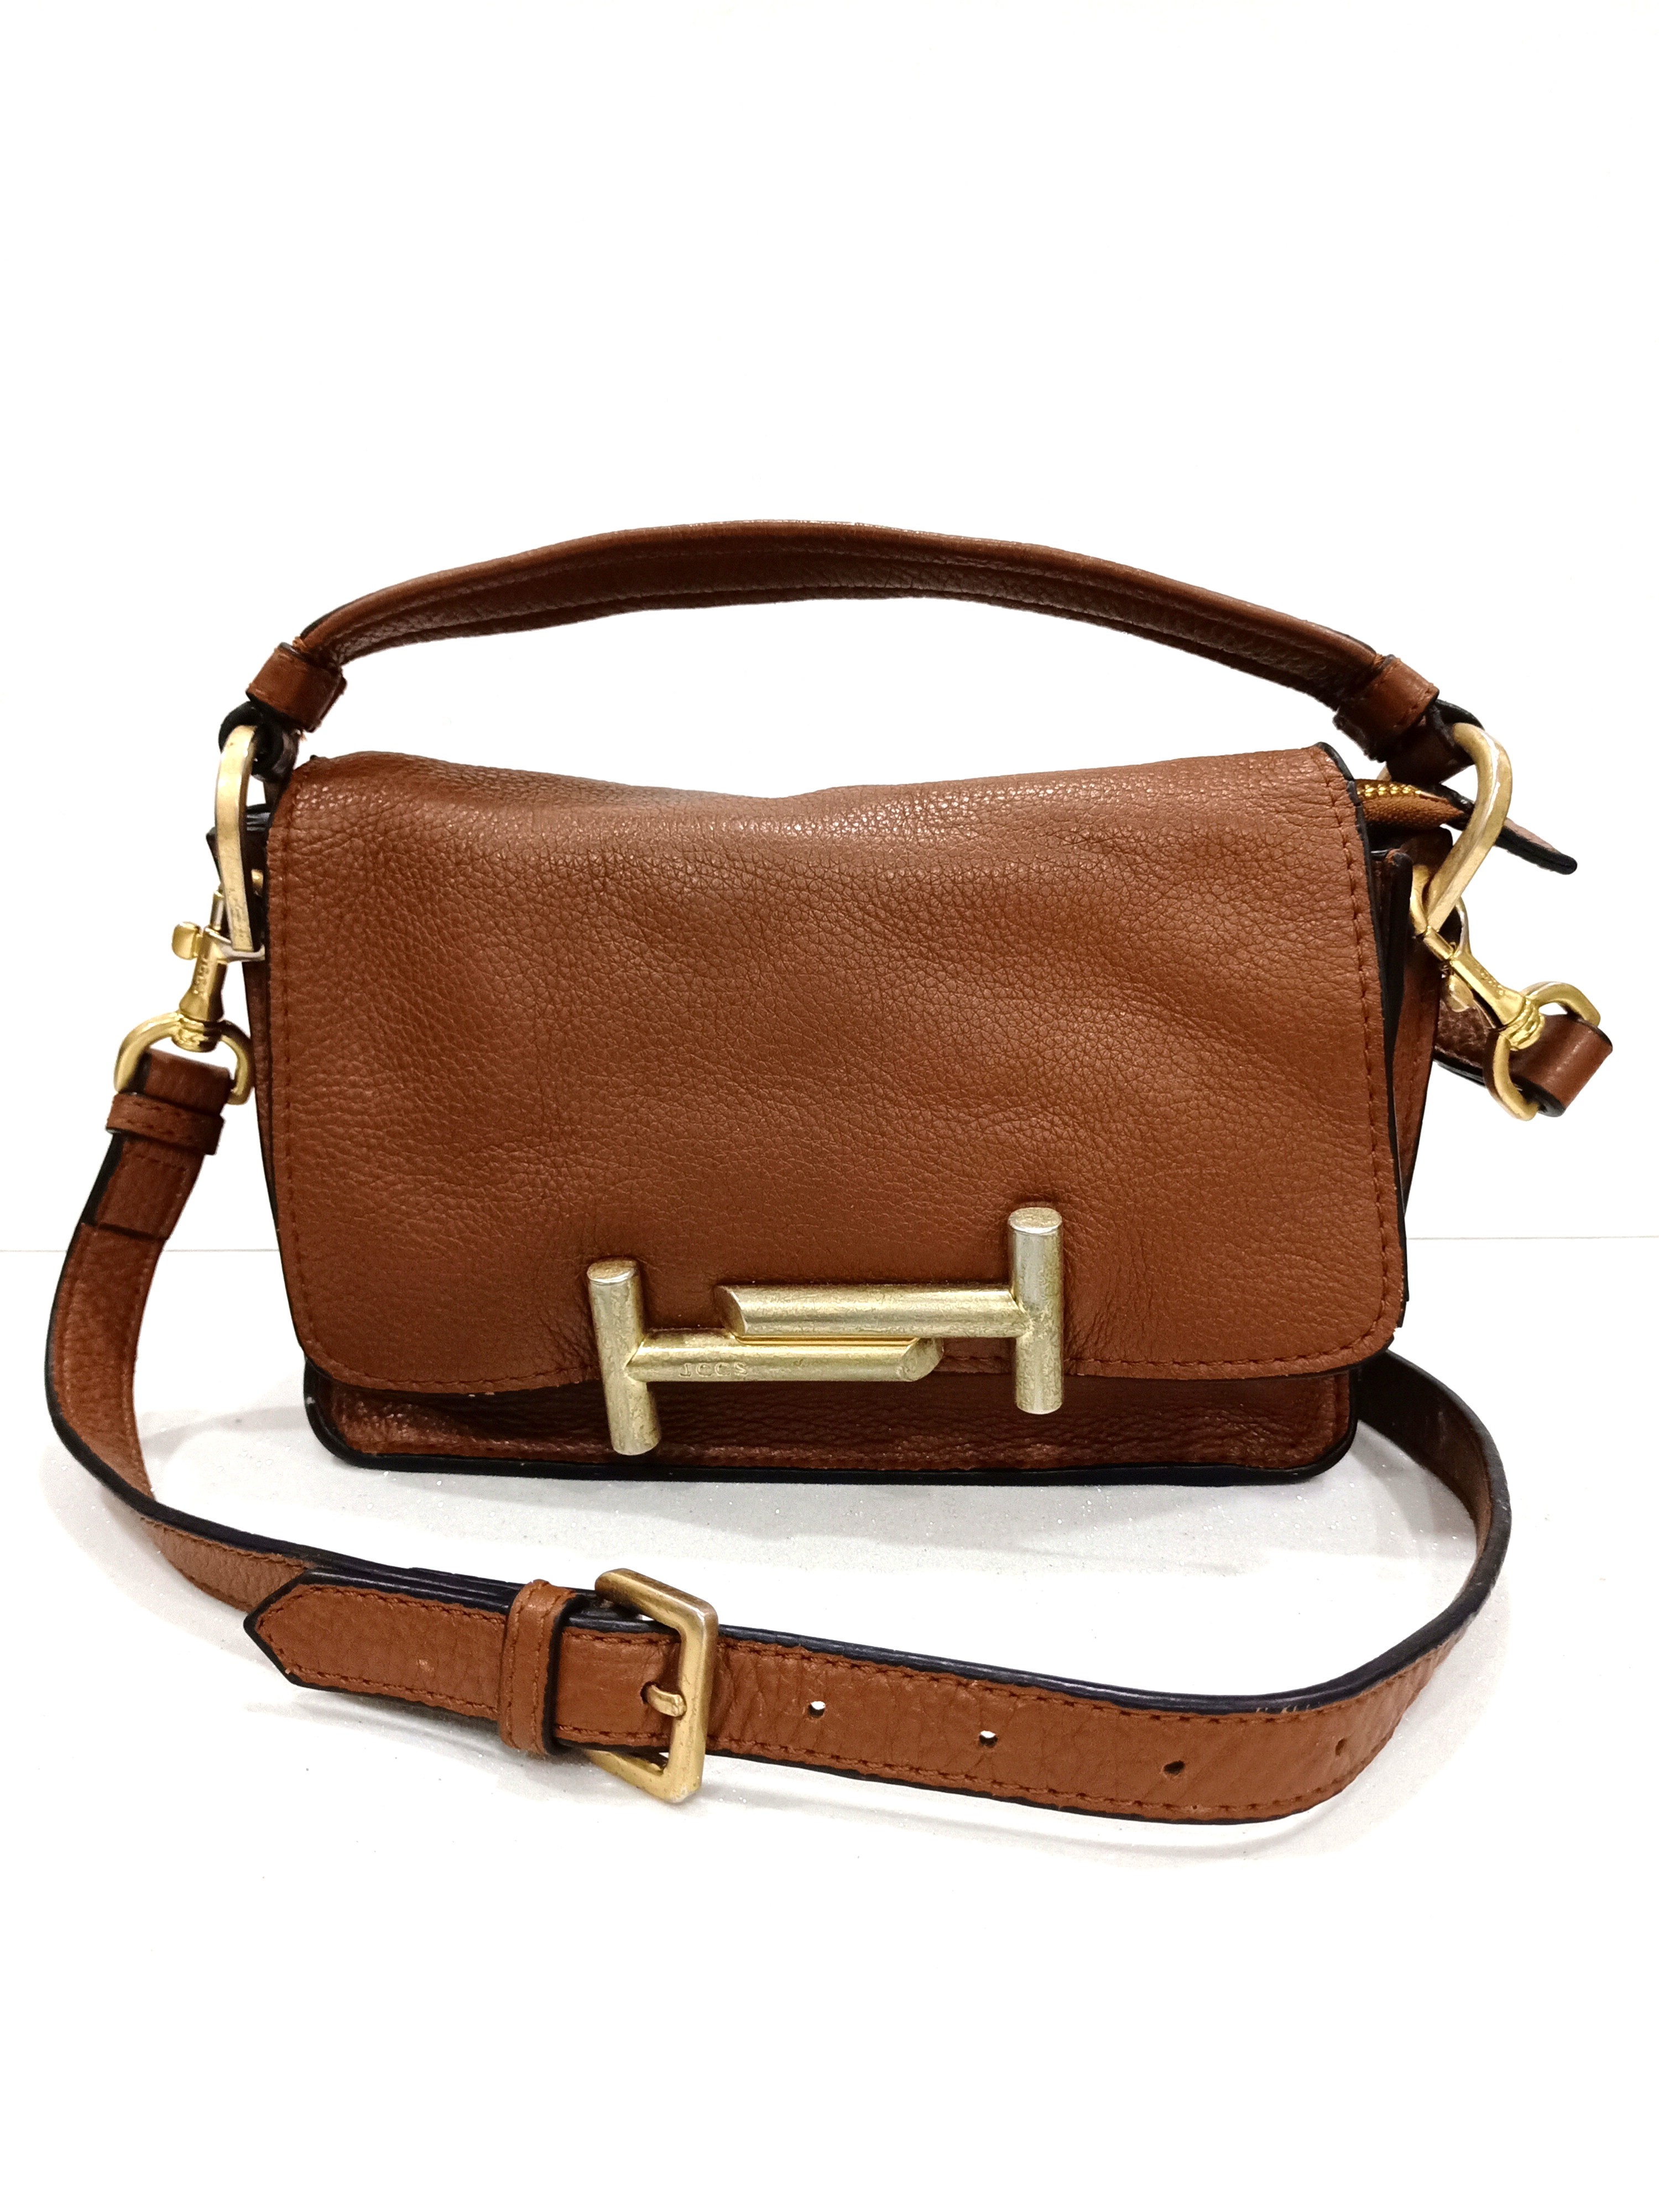 jccs genuine leather handbag t 1614339121 99451d00